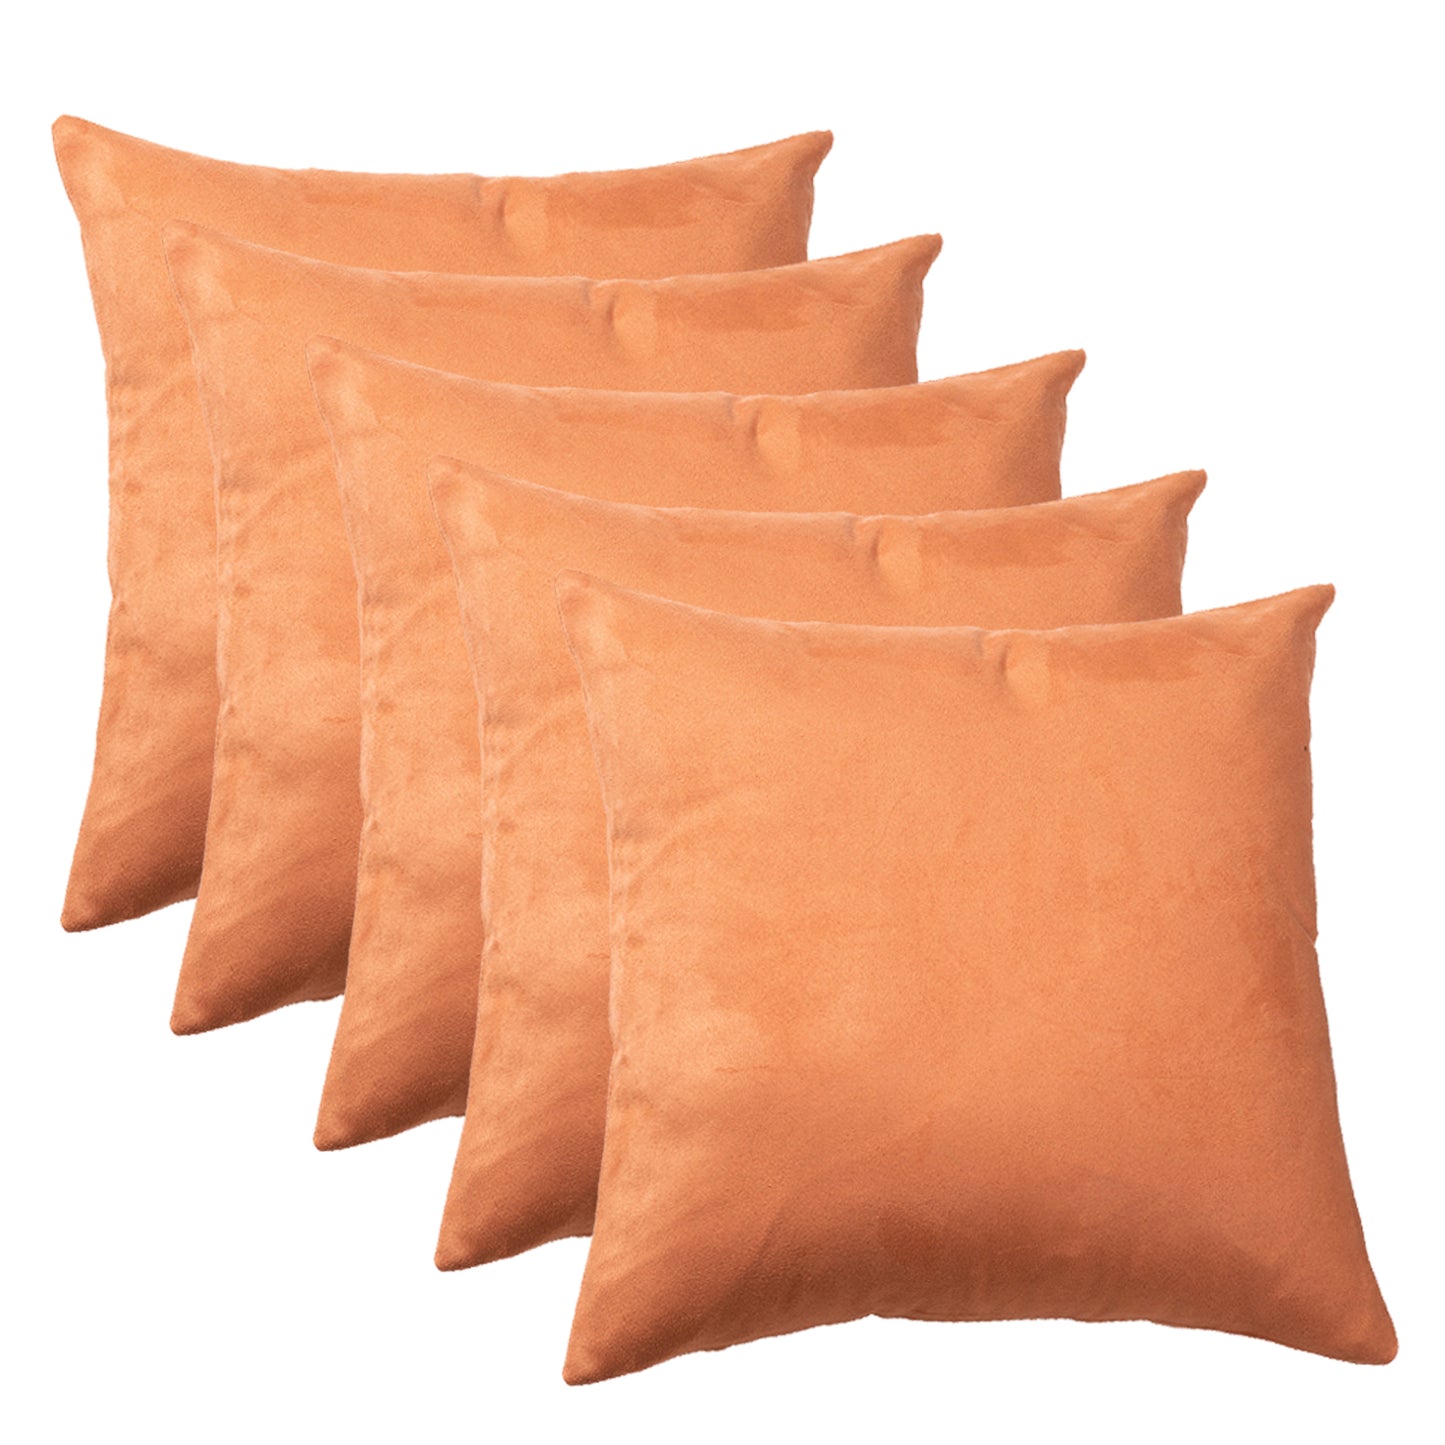 Lush Velvet Cushion Cover Orange 16 X 16 Inches Set of 5